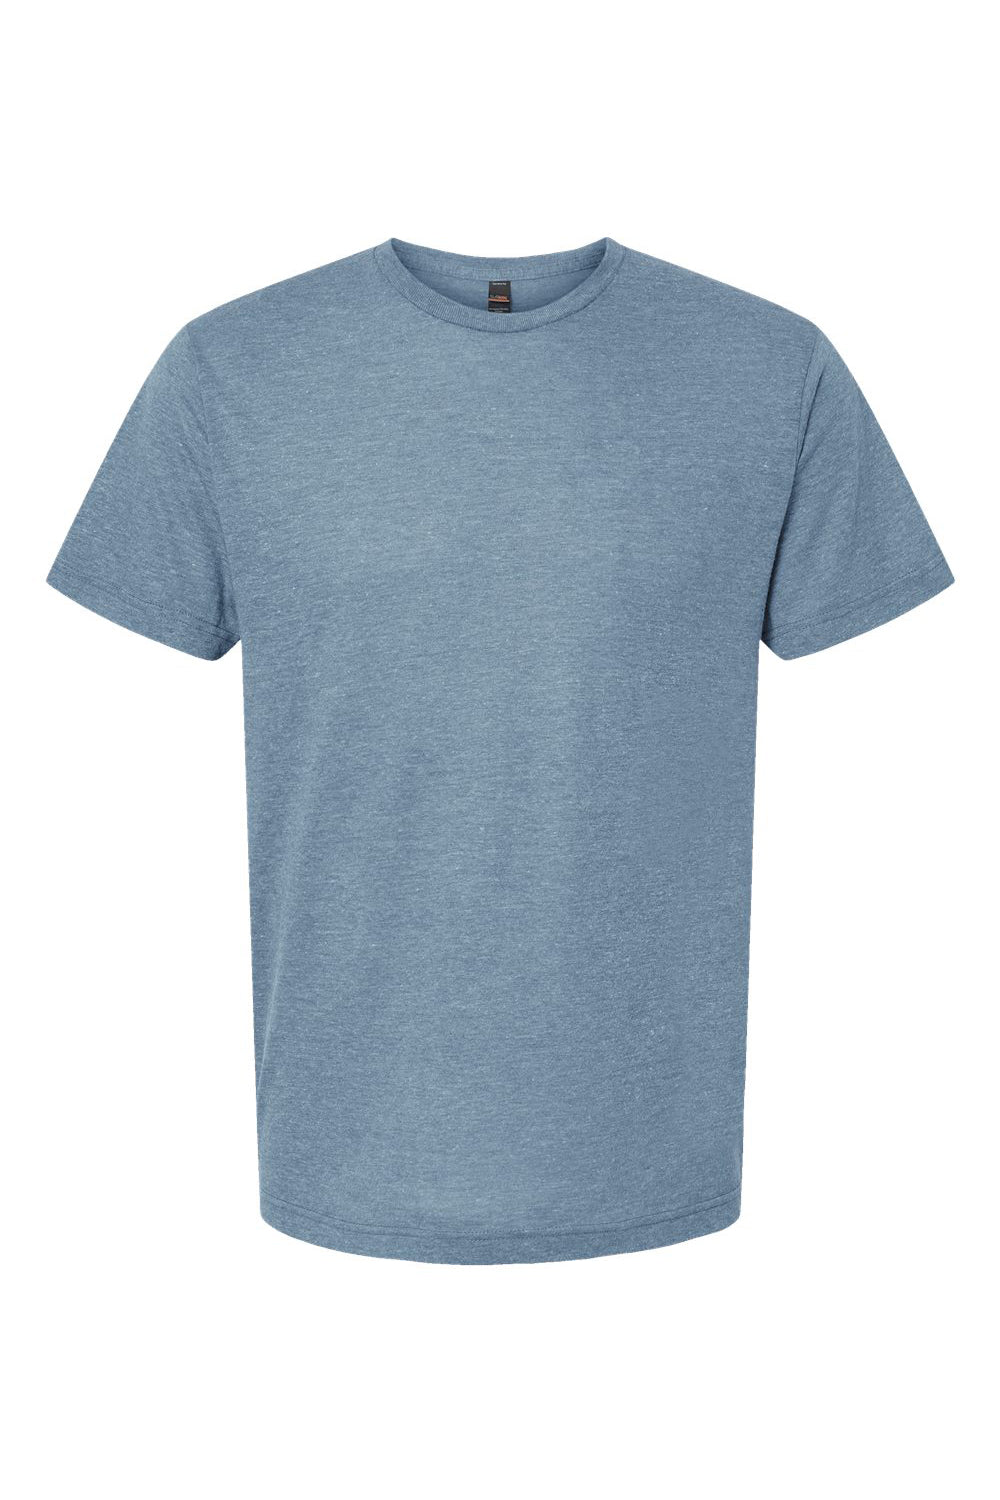 Tultex 254 Mens Short Sleeve Crewneck T-Shirt Denim Blue Flat Front